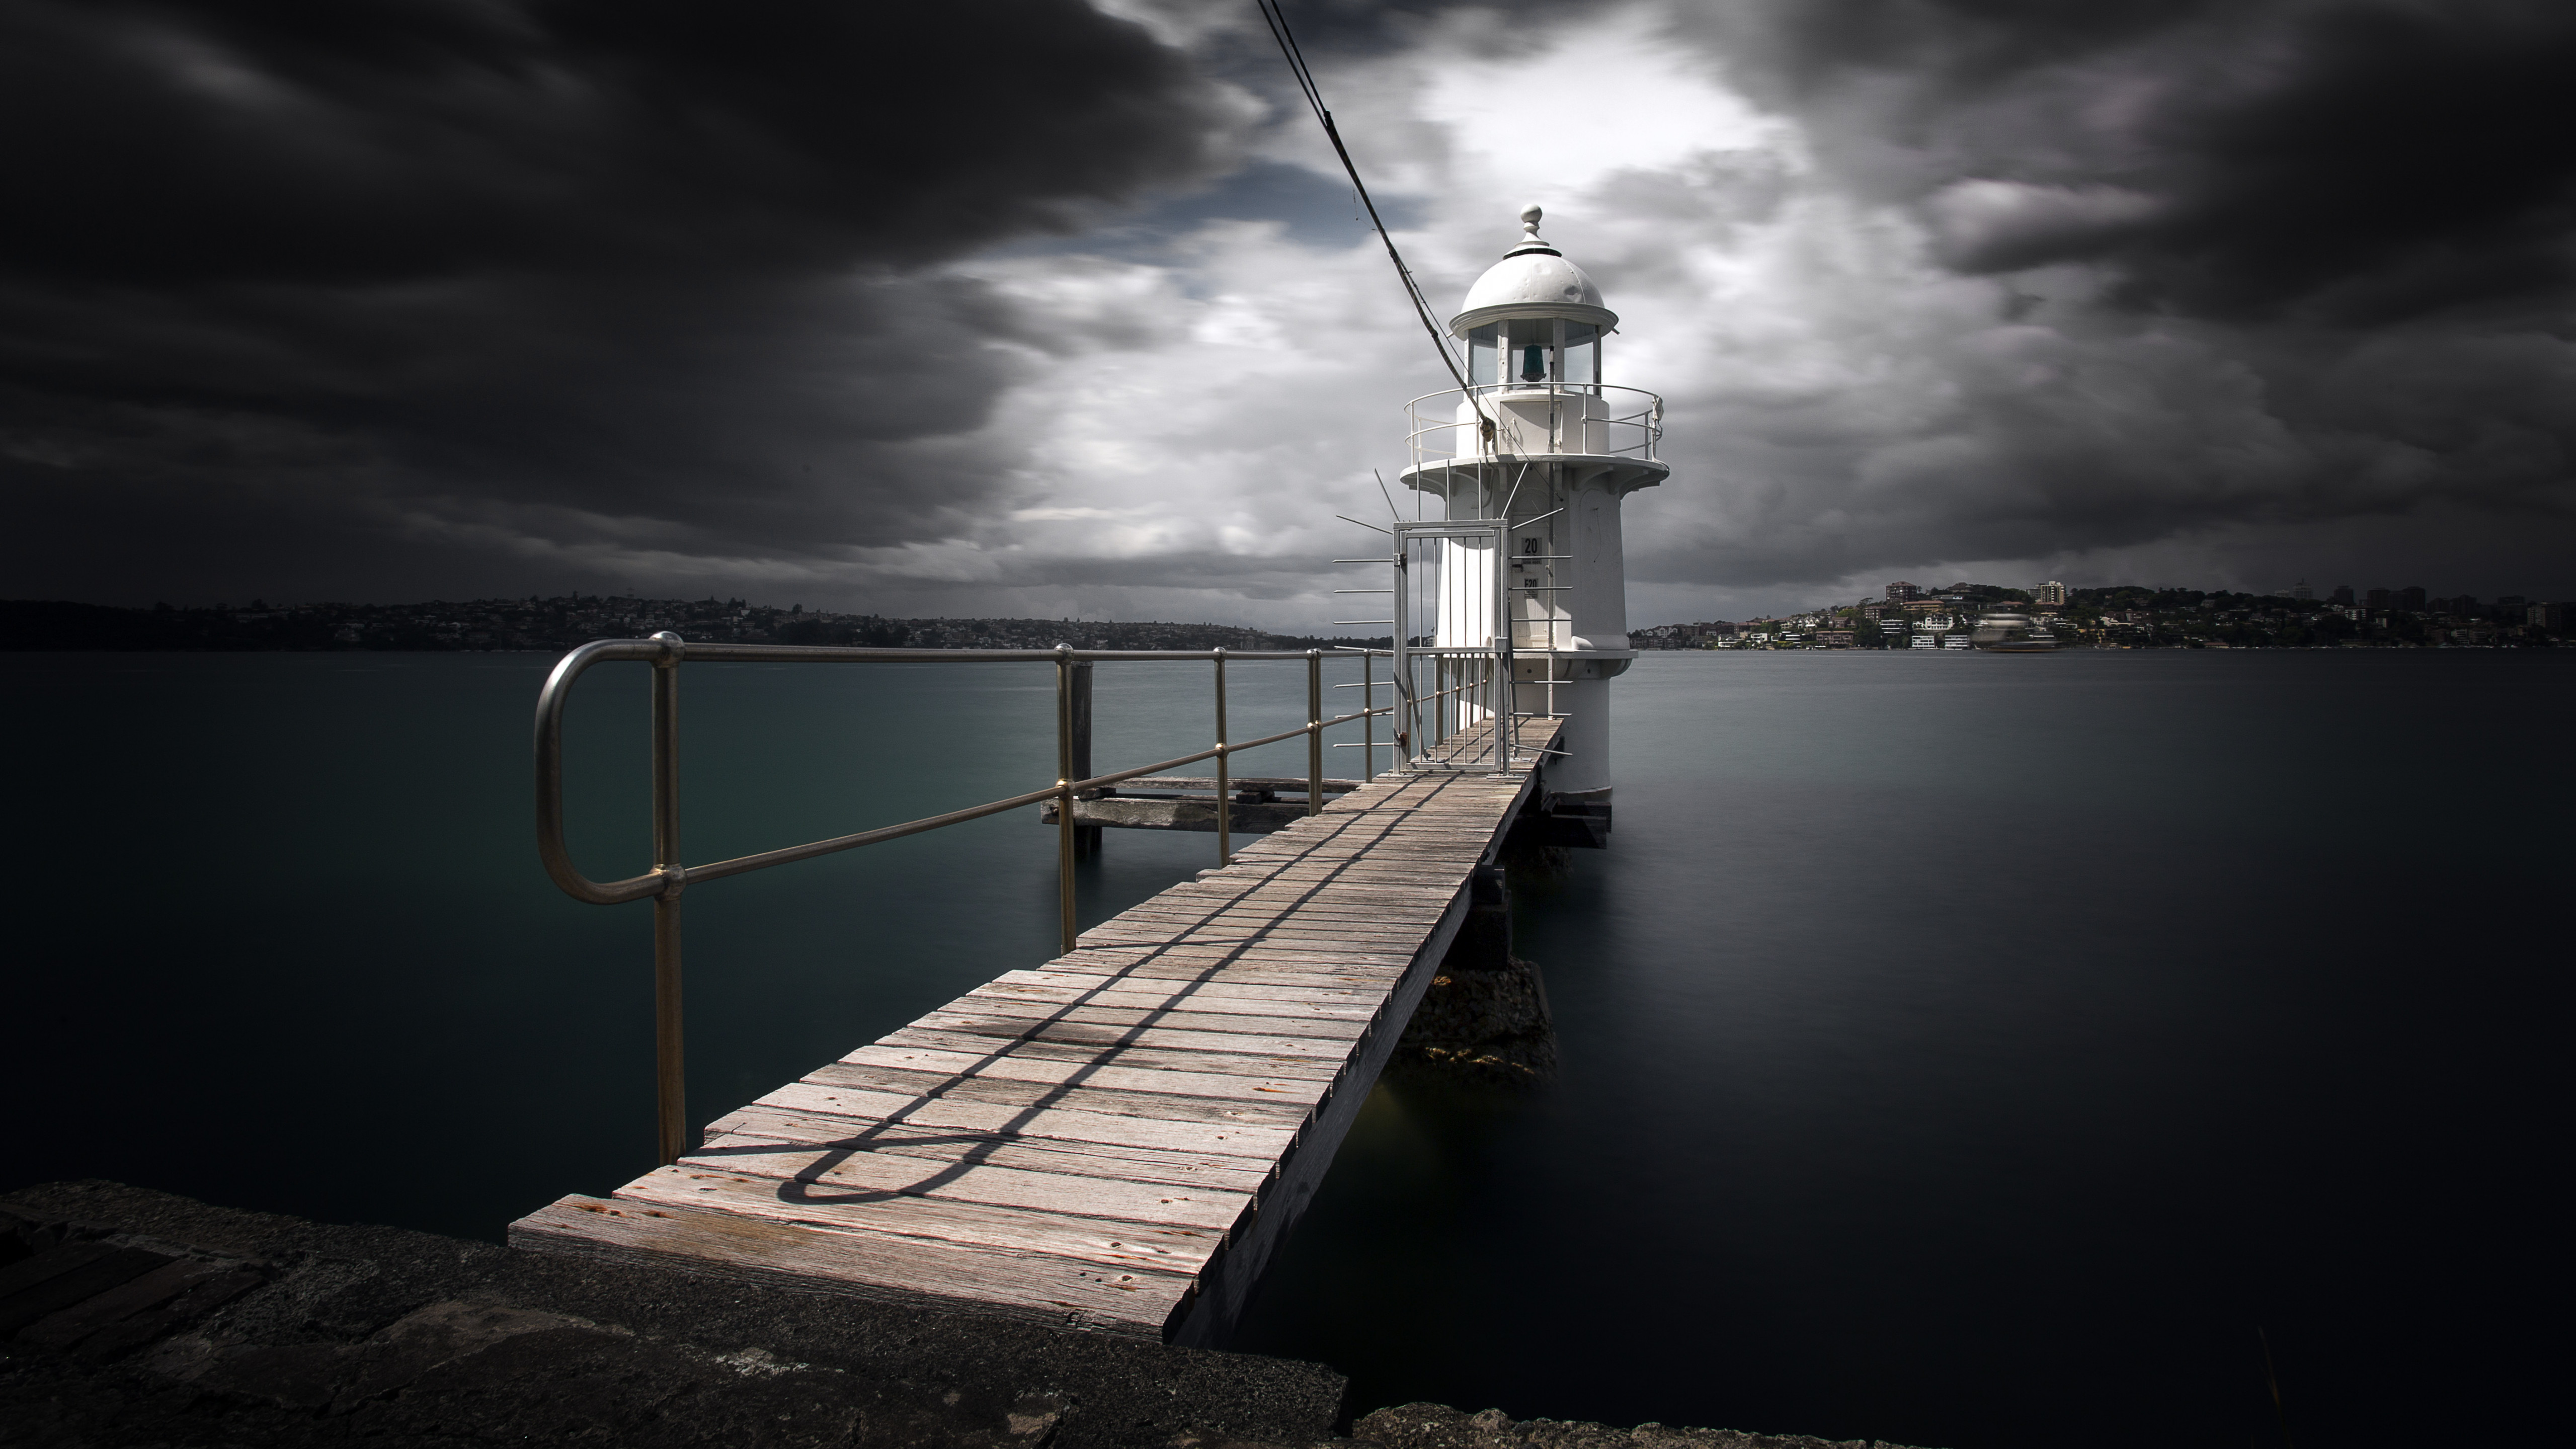 Wallpaper Sydney Harbour, 5k, 4k wallpaper, 8k, lighthouse, river, pierce,  clouds, Nature #5510